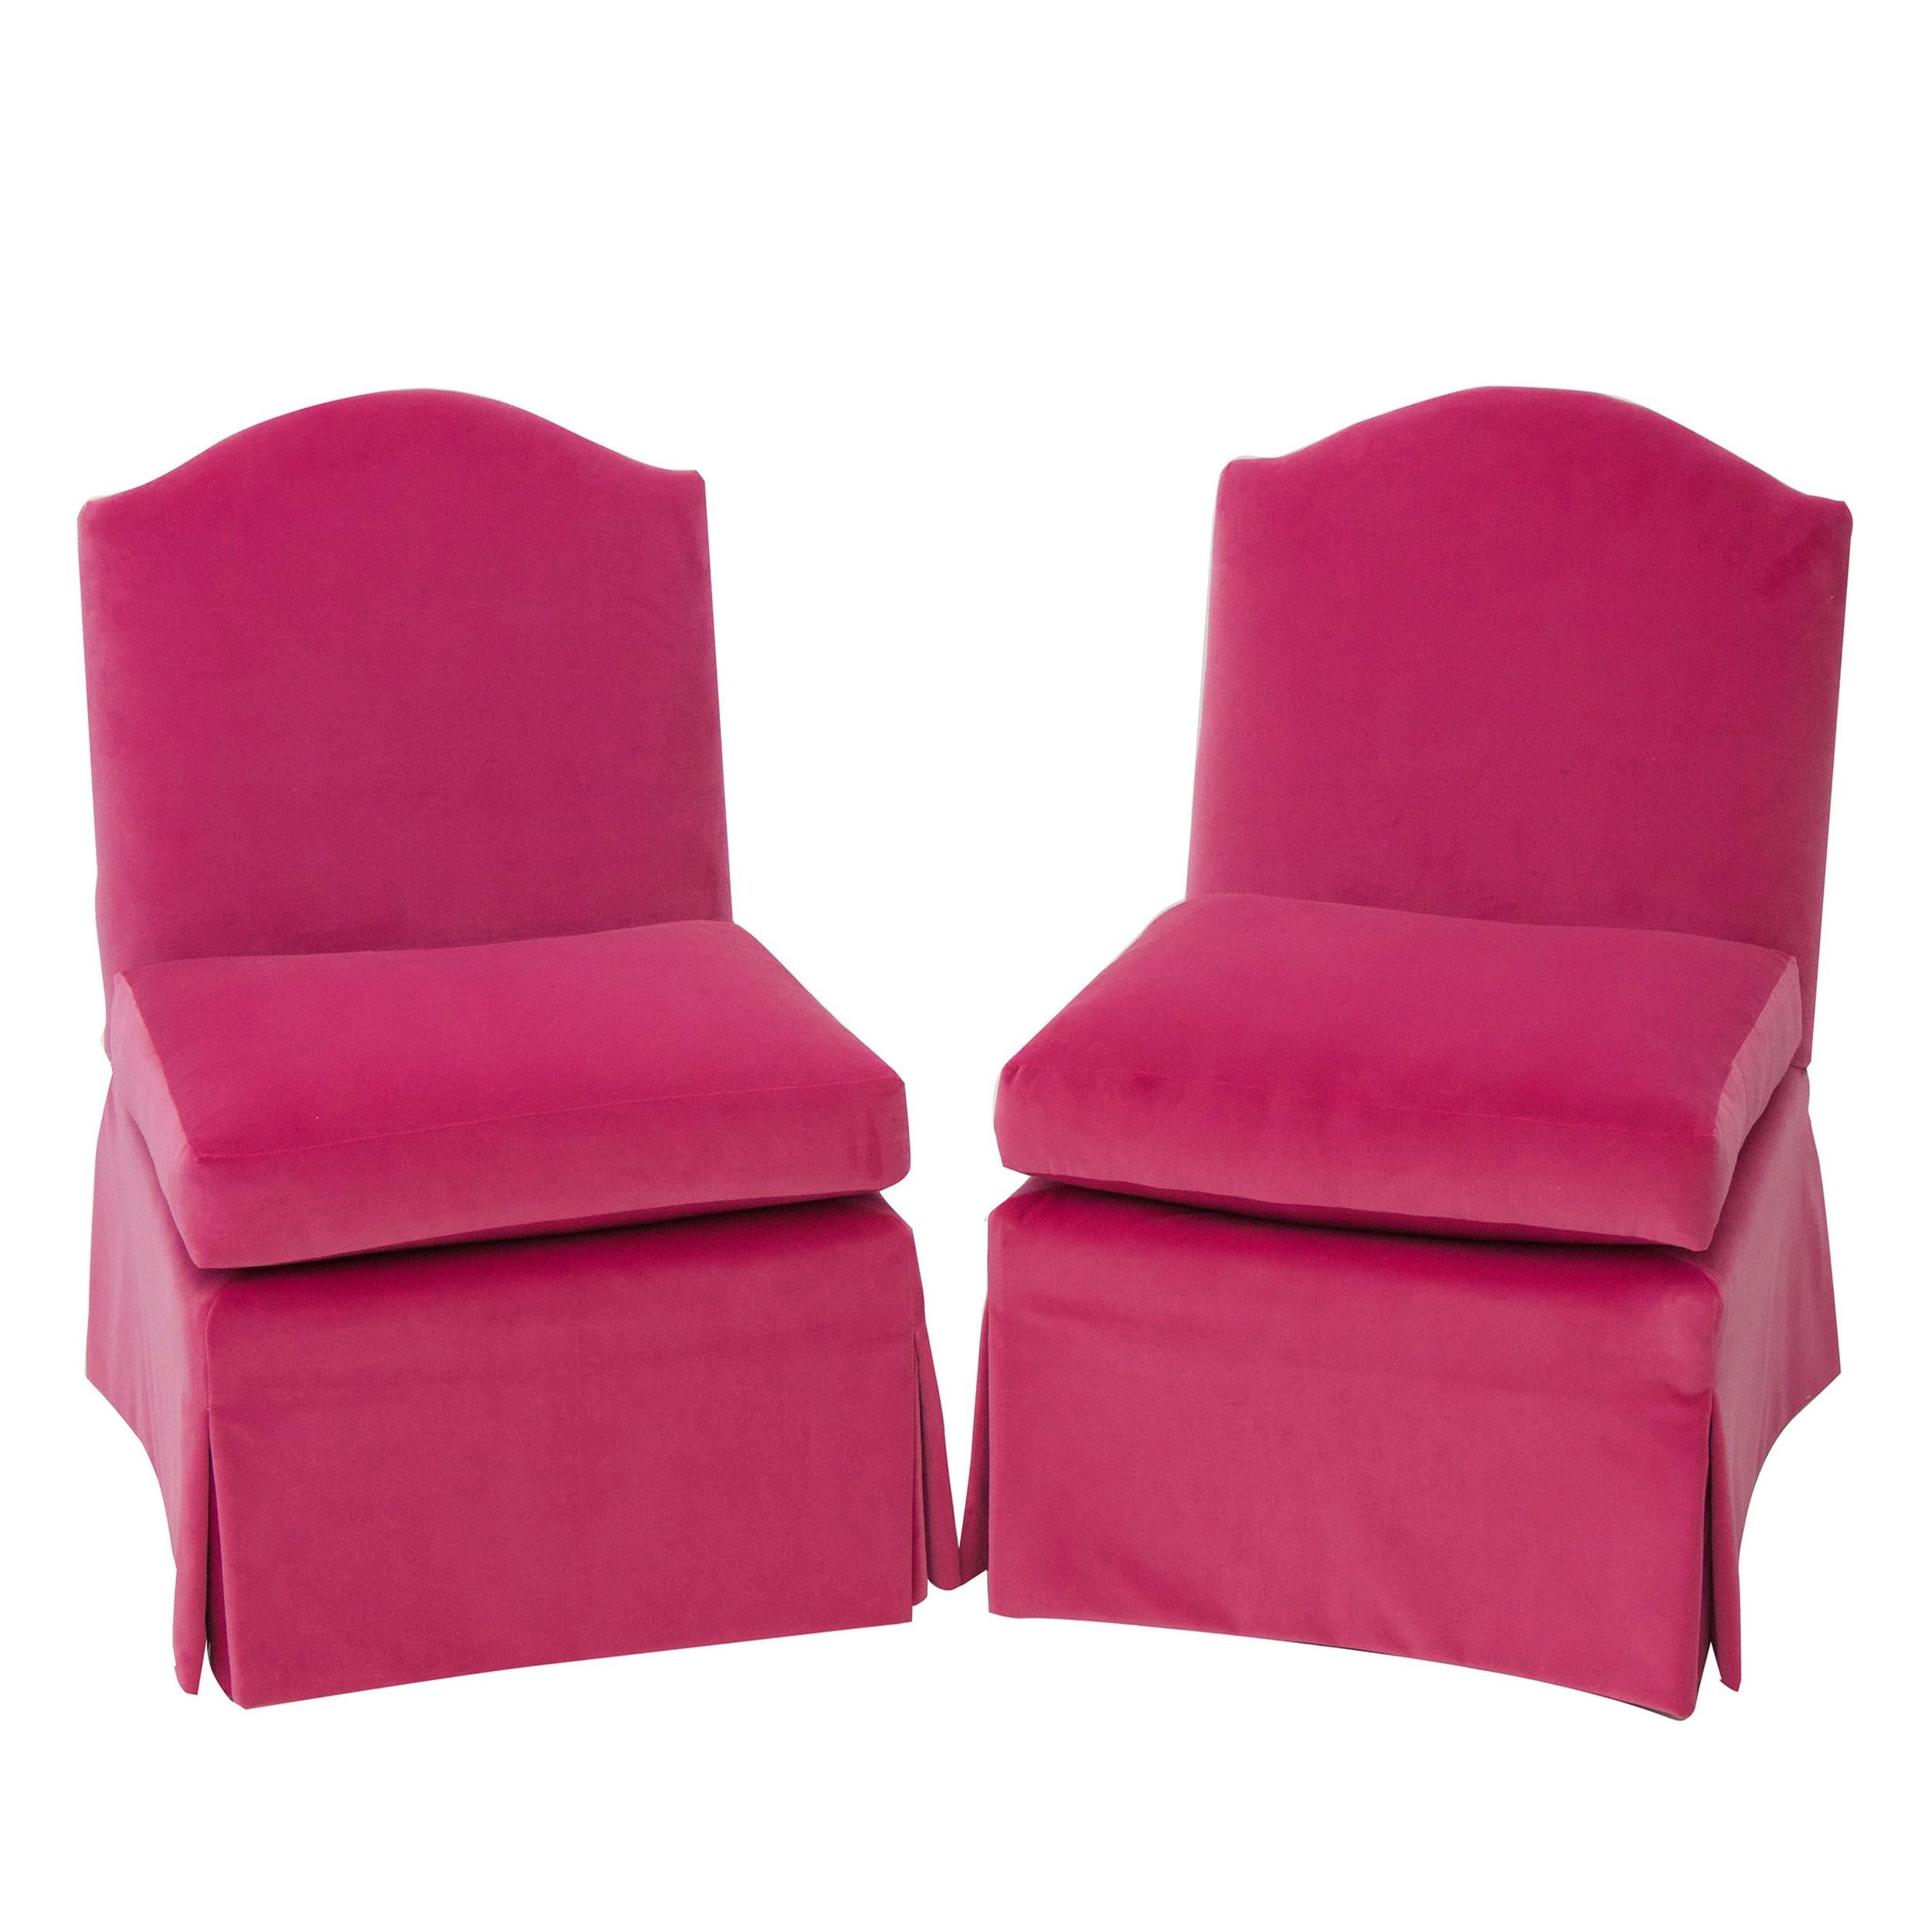 skirted slipper chairs